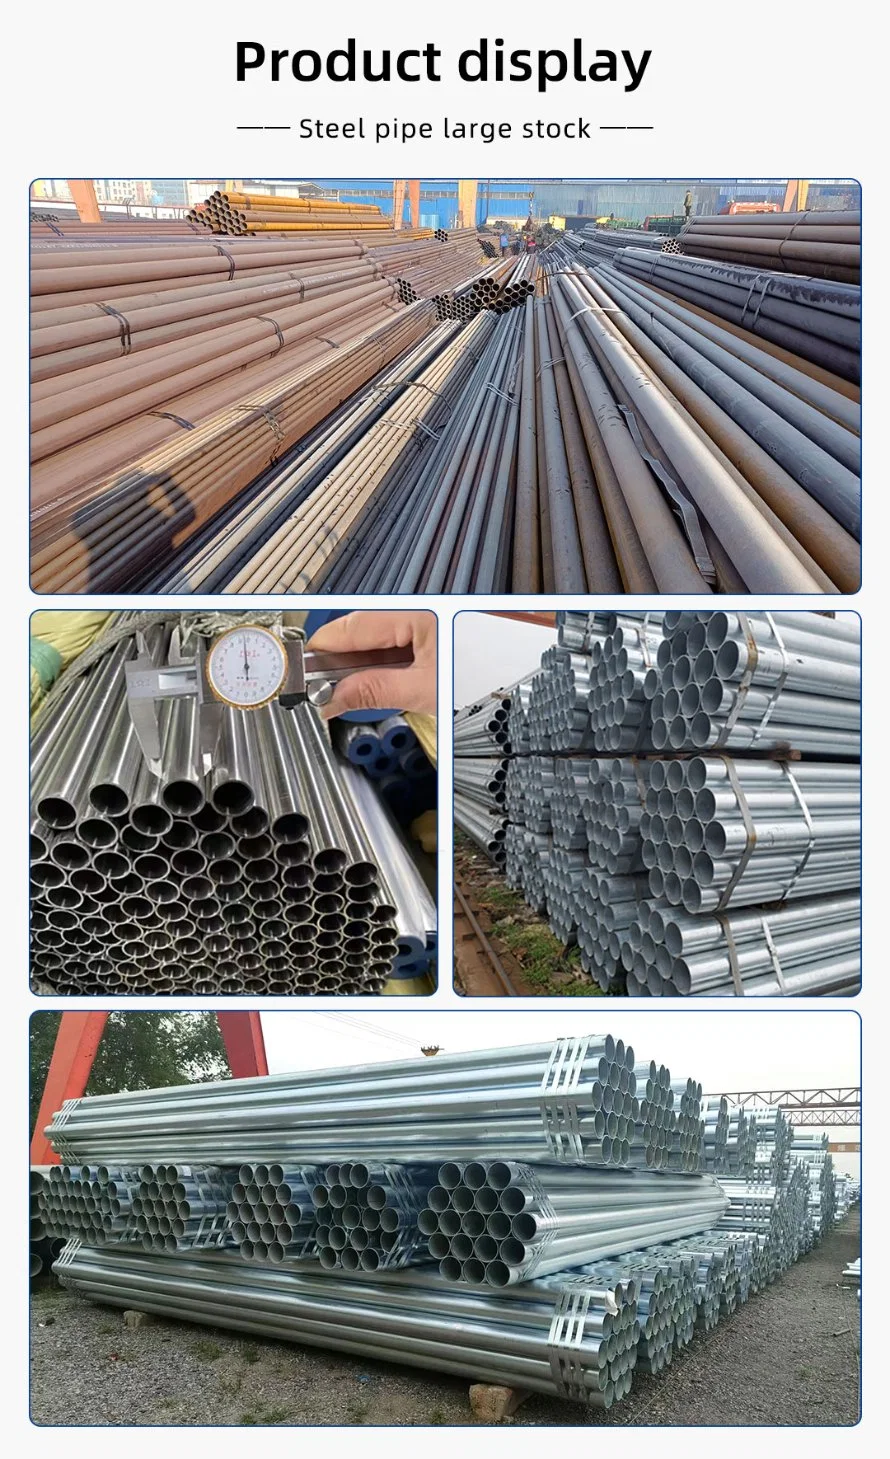 Stainless Steel Round Tube / Pipe -Various Sizes- 304 Grade - 1 Meter Long